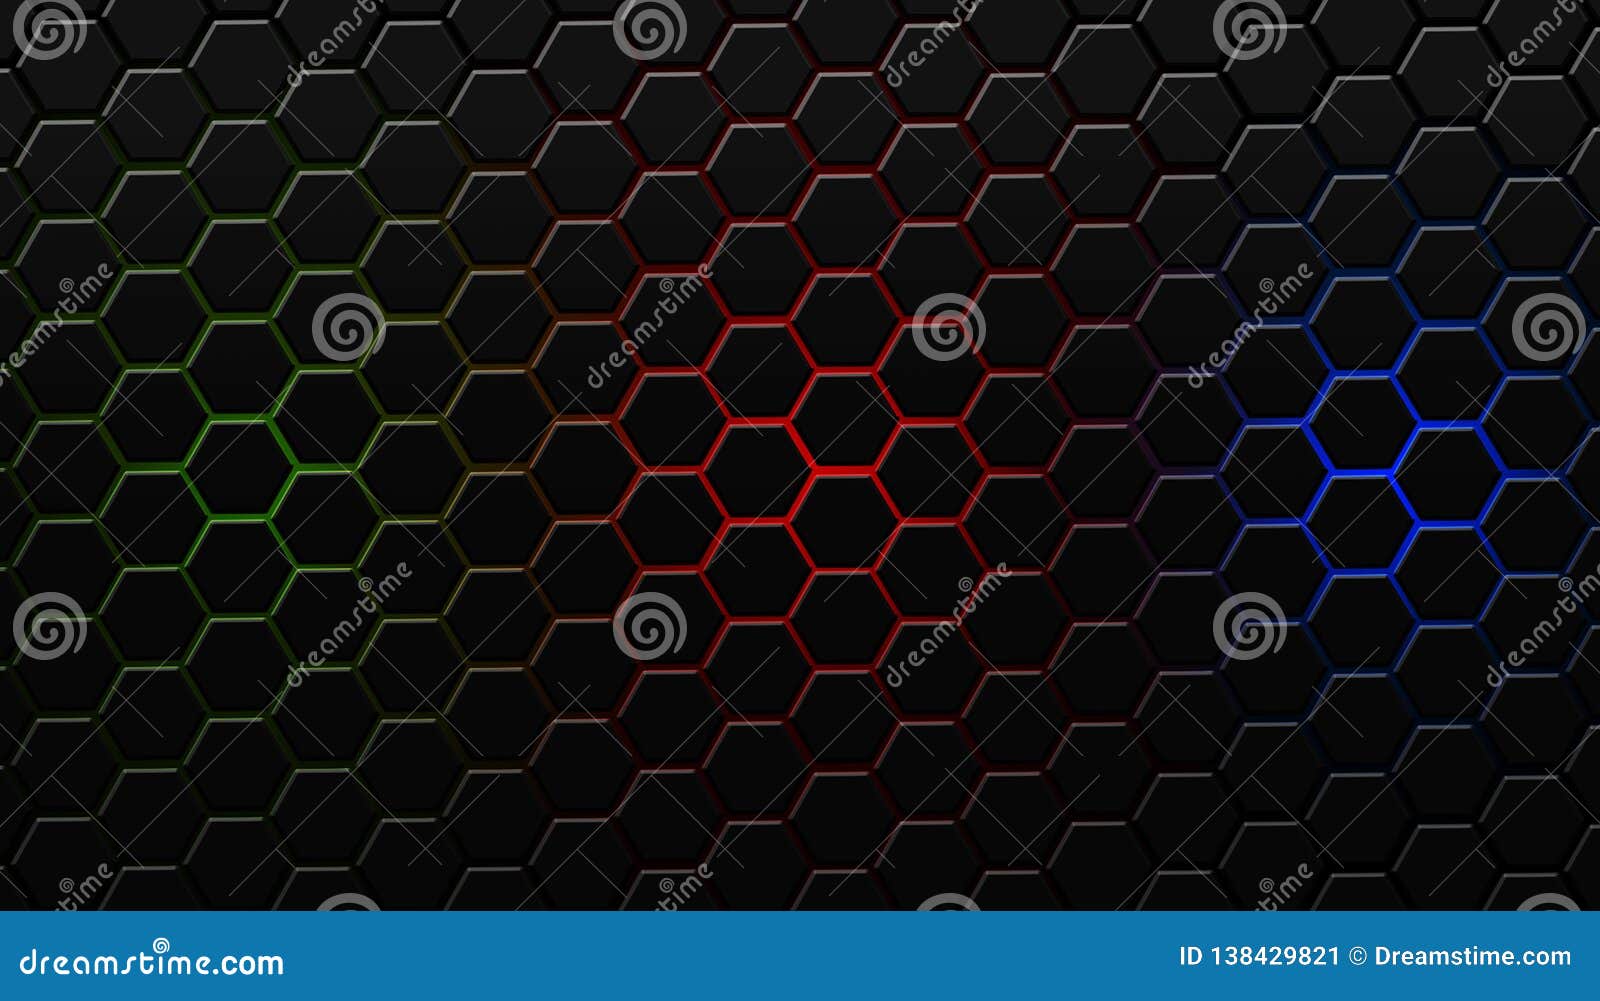 Crysis Wallpaper 4K, Remastered, Nomad, 2020 Games